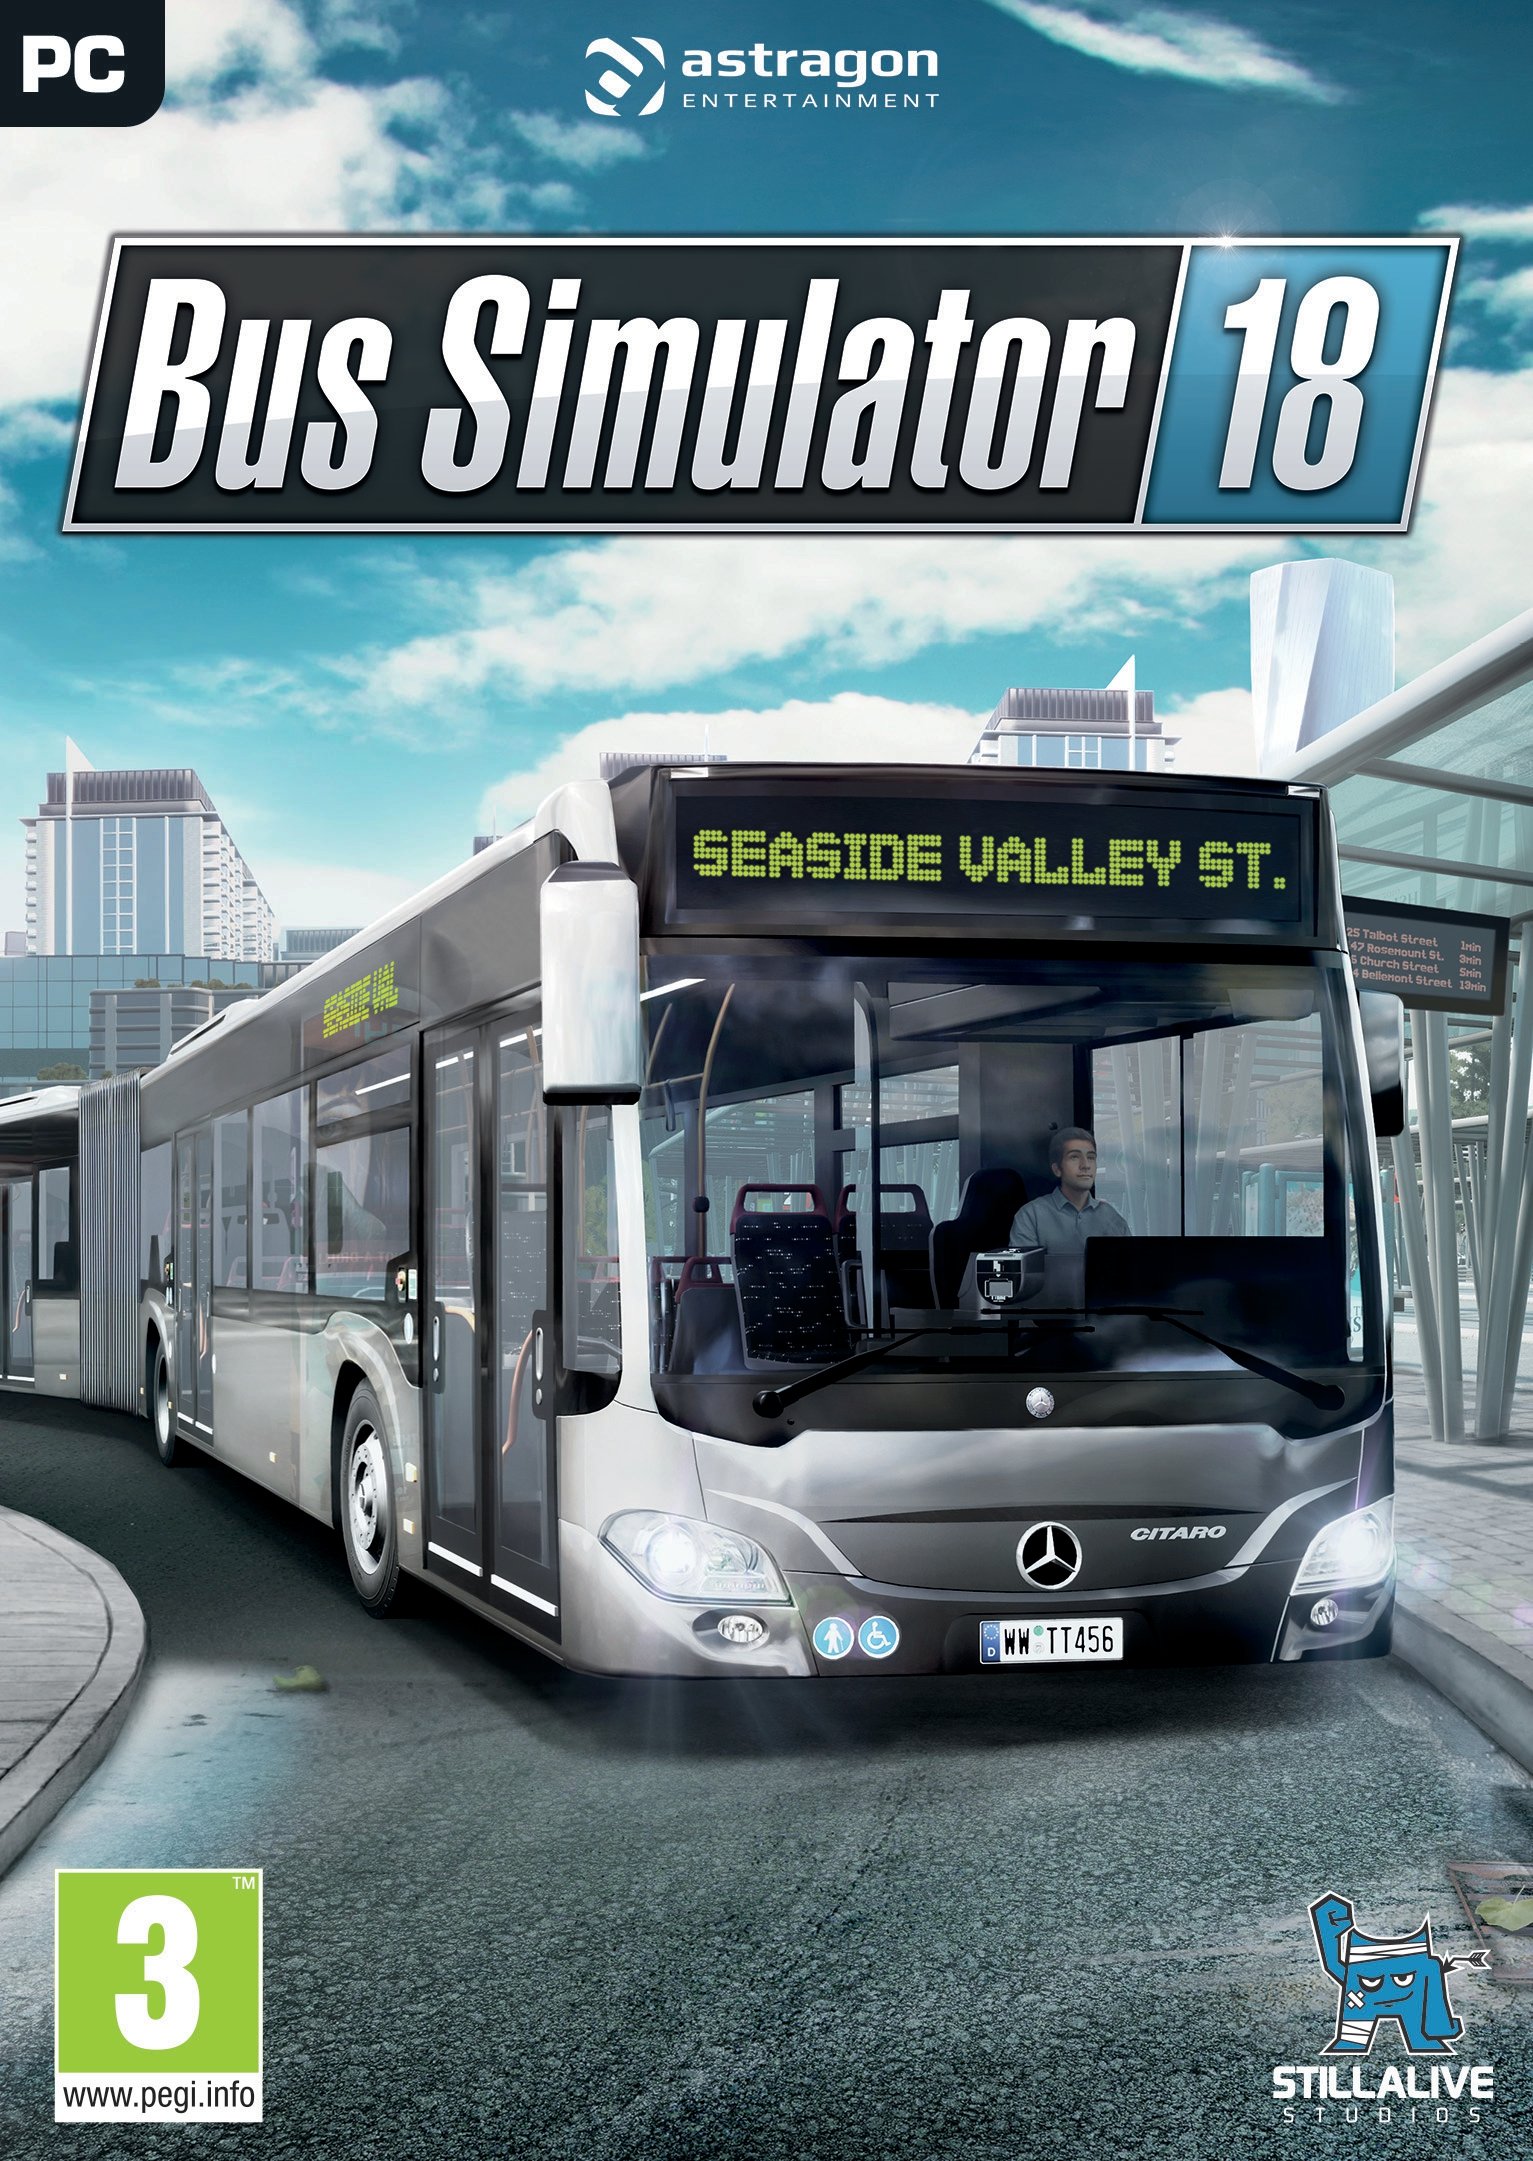 bus simulator 18 apk mod